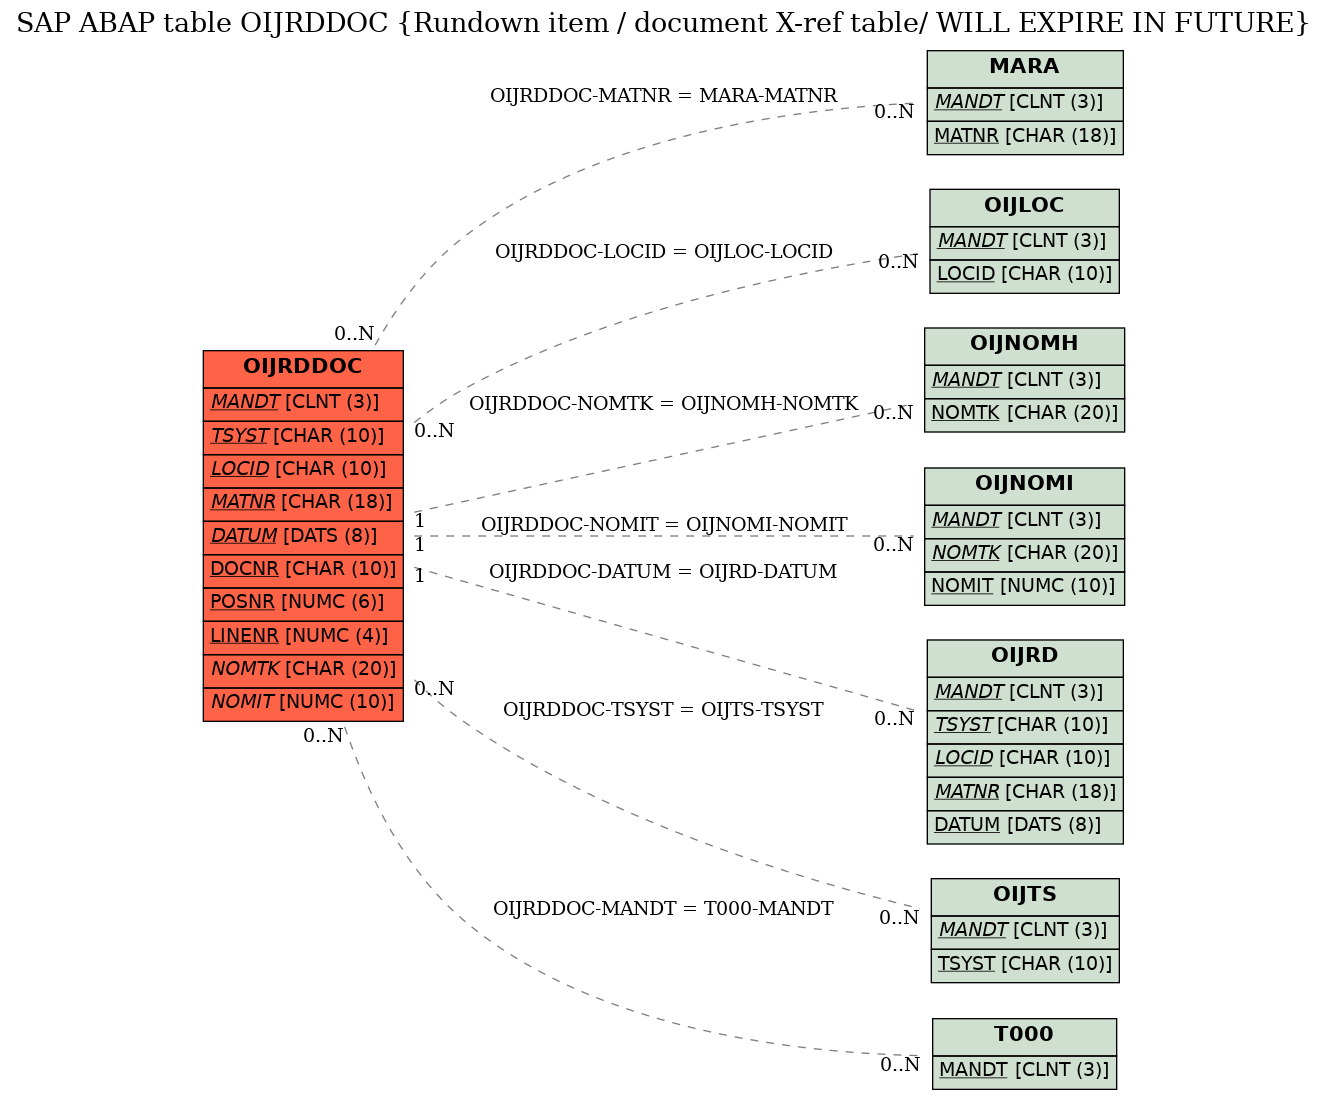 E-R Diagram for table OIJRDDOC (Rundown item / document X-ref table/ WILL EXPIRE IN FUTURE)